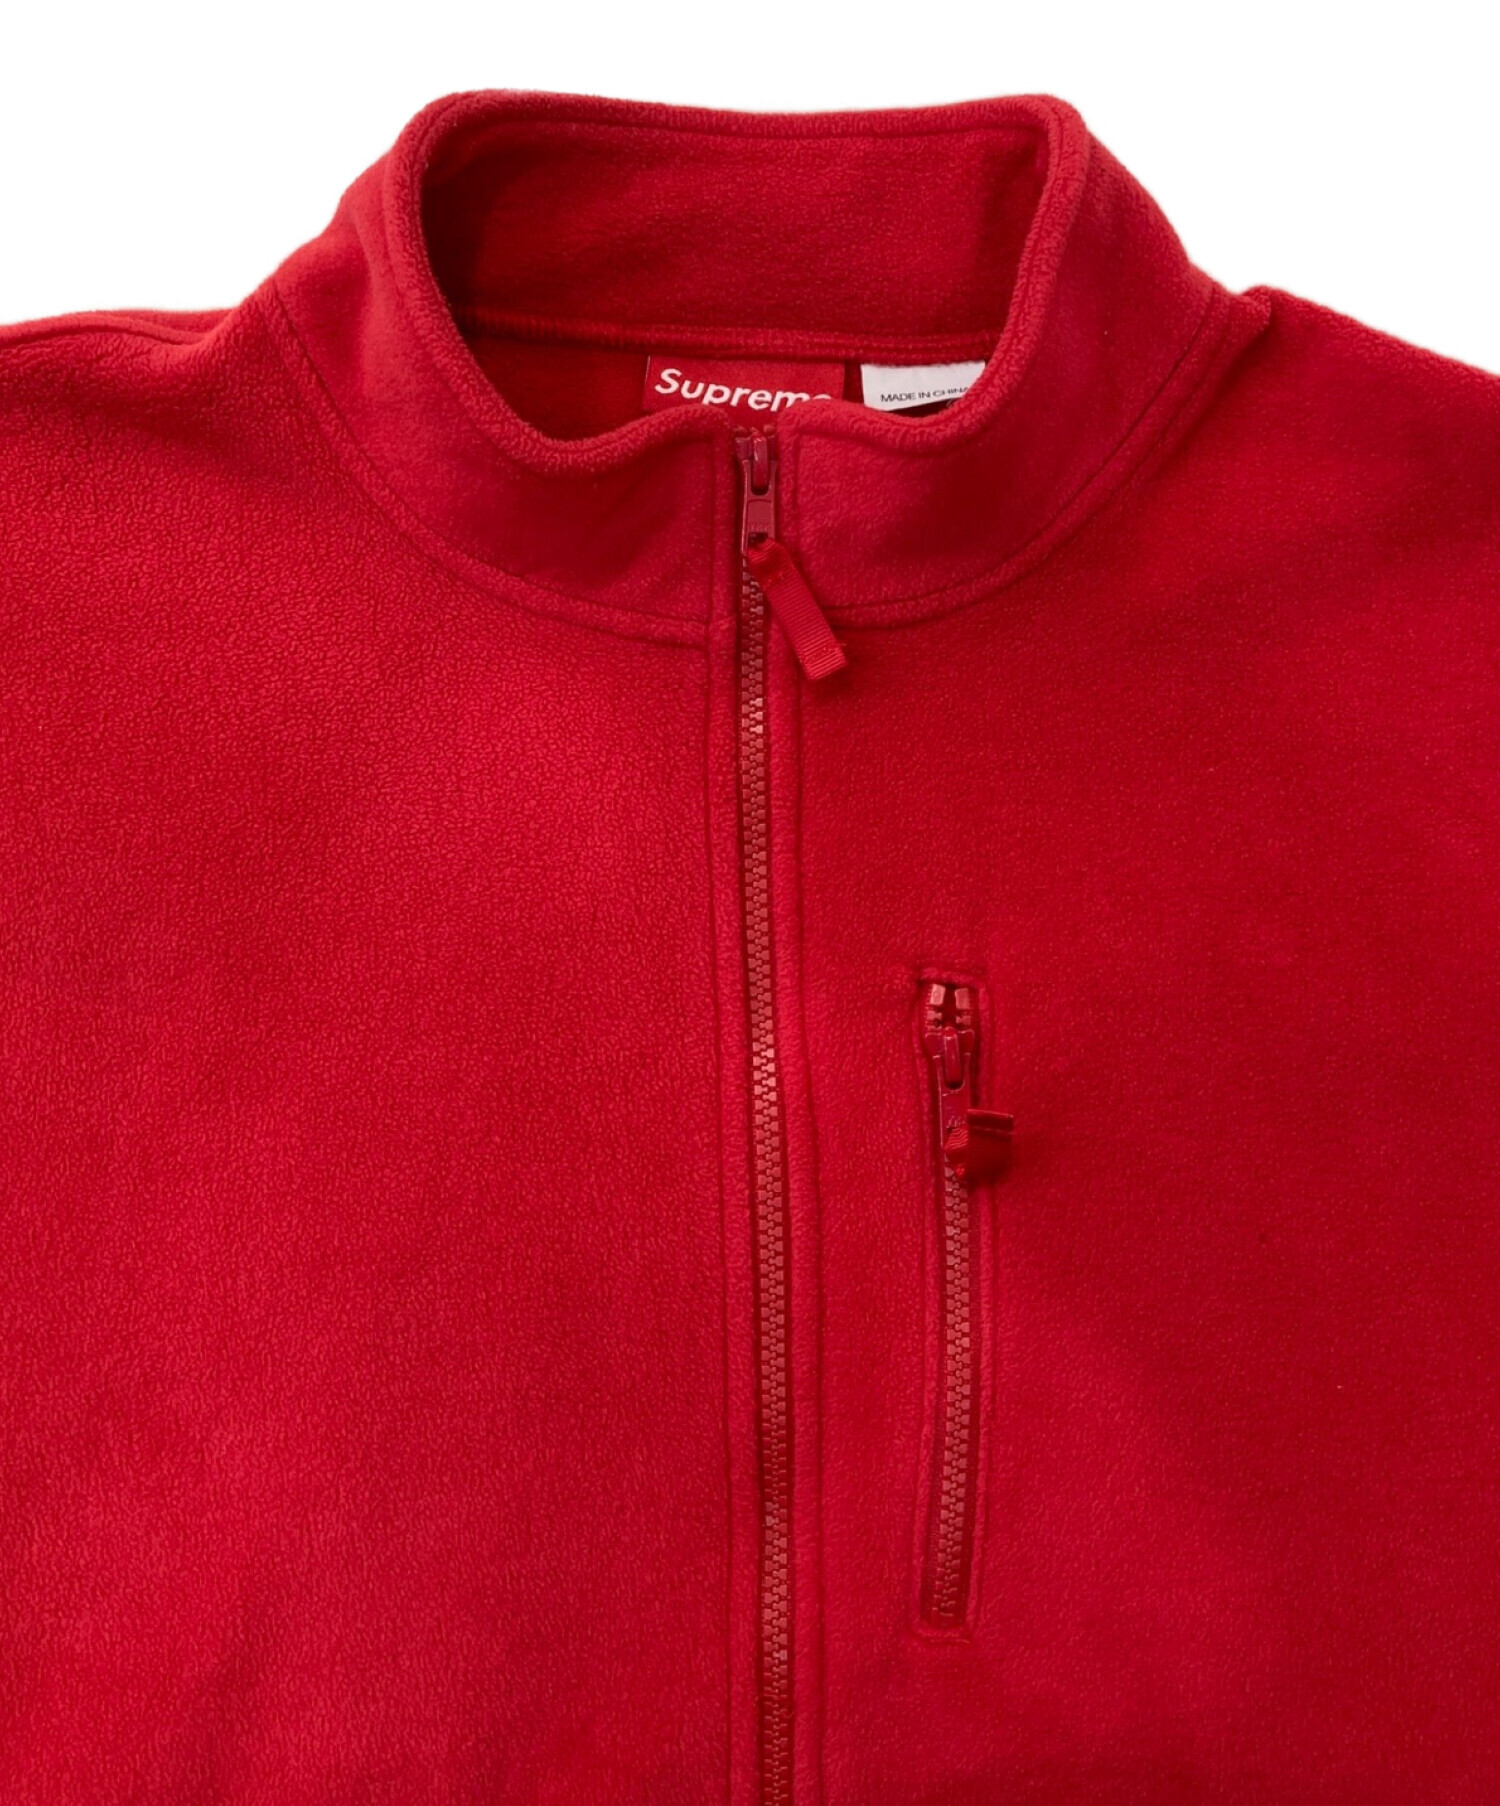 SUPREME (シュプリーム) polartec zip jacket レッド サイズ:L